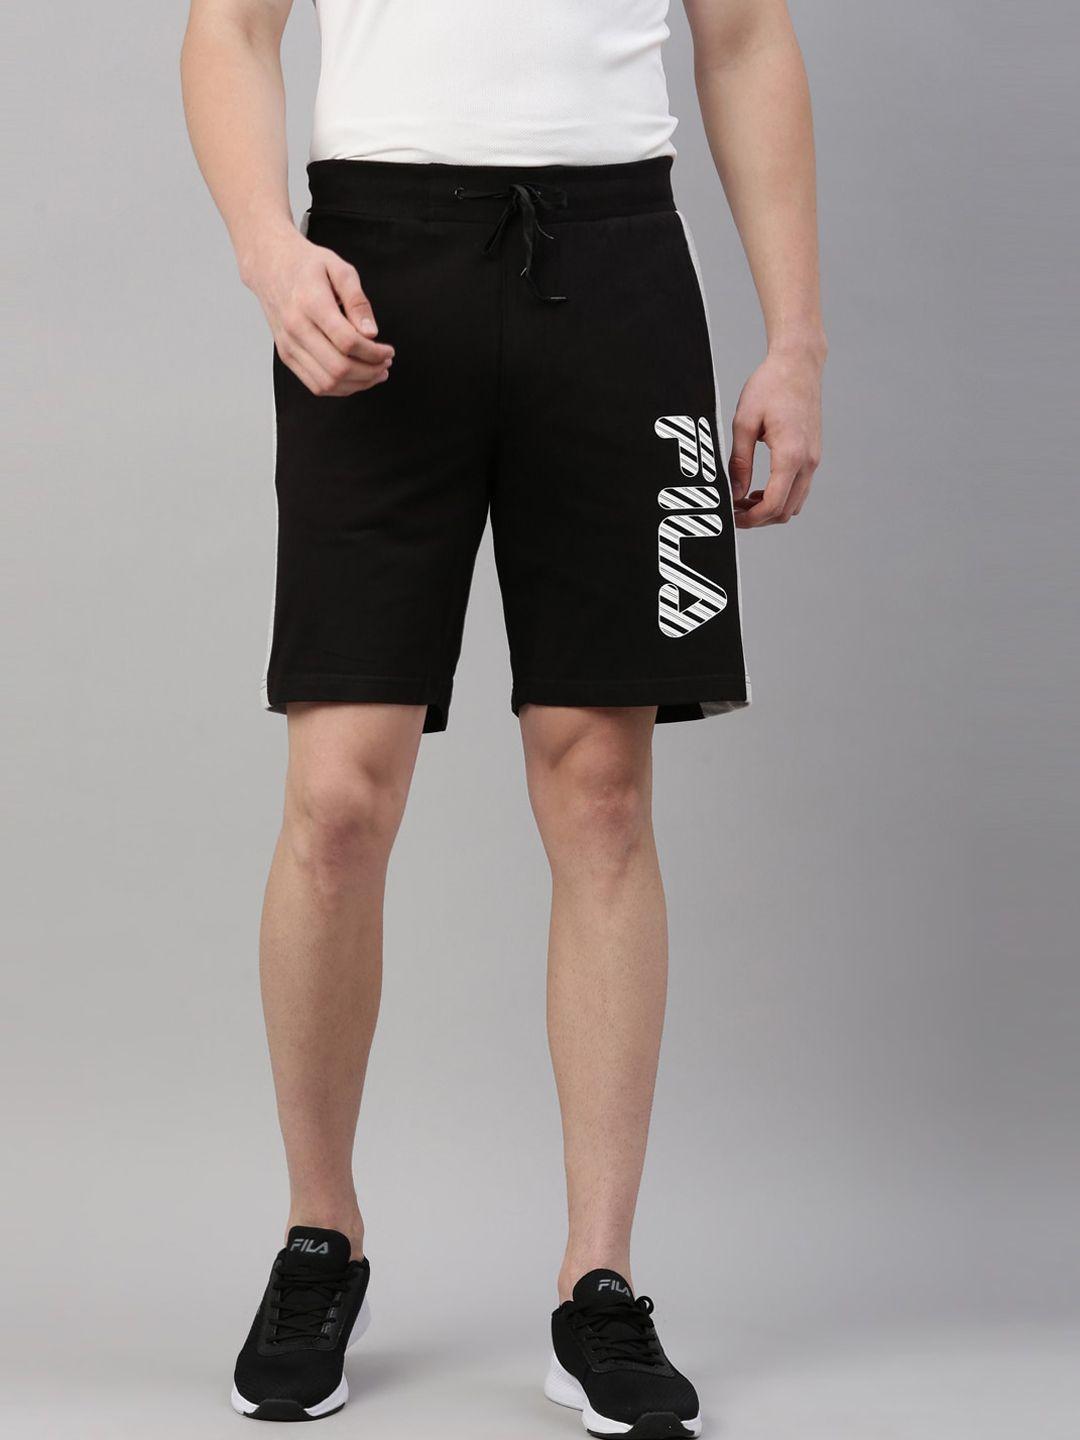 fila-men-black-training-or-gym-sports-shorts